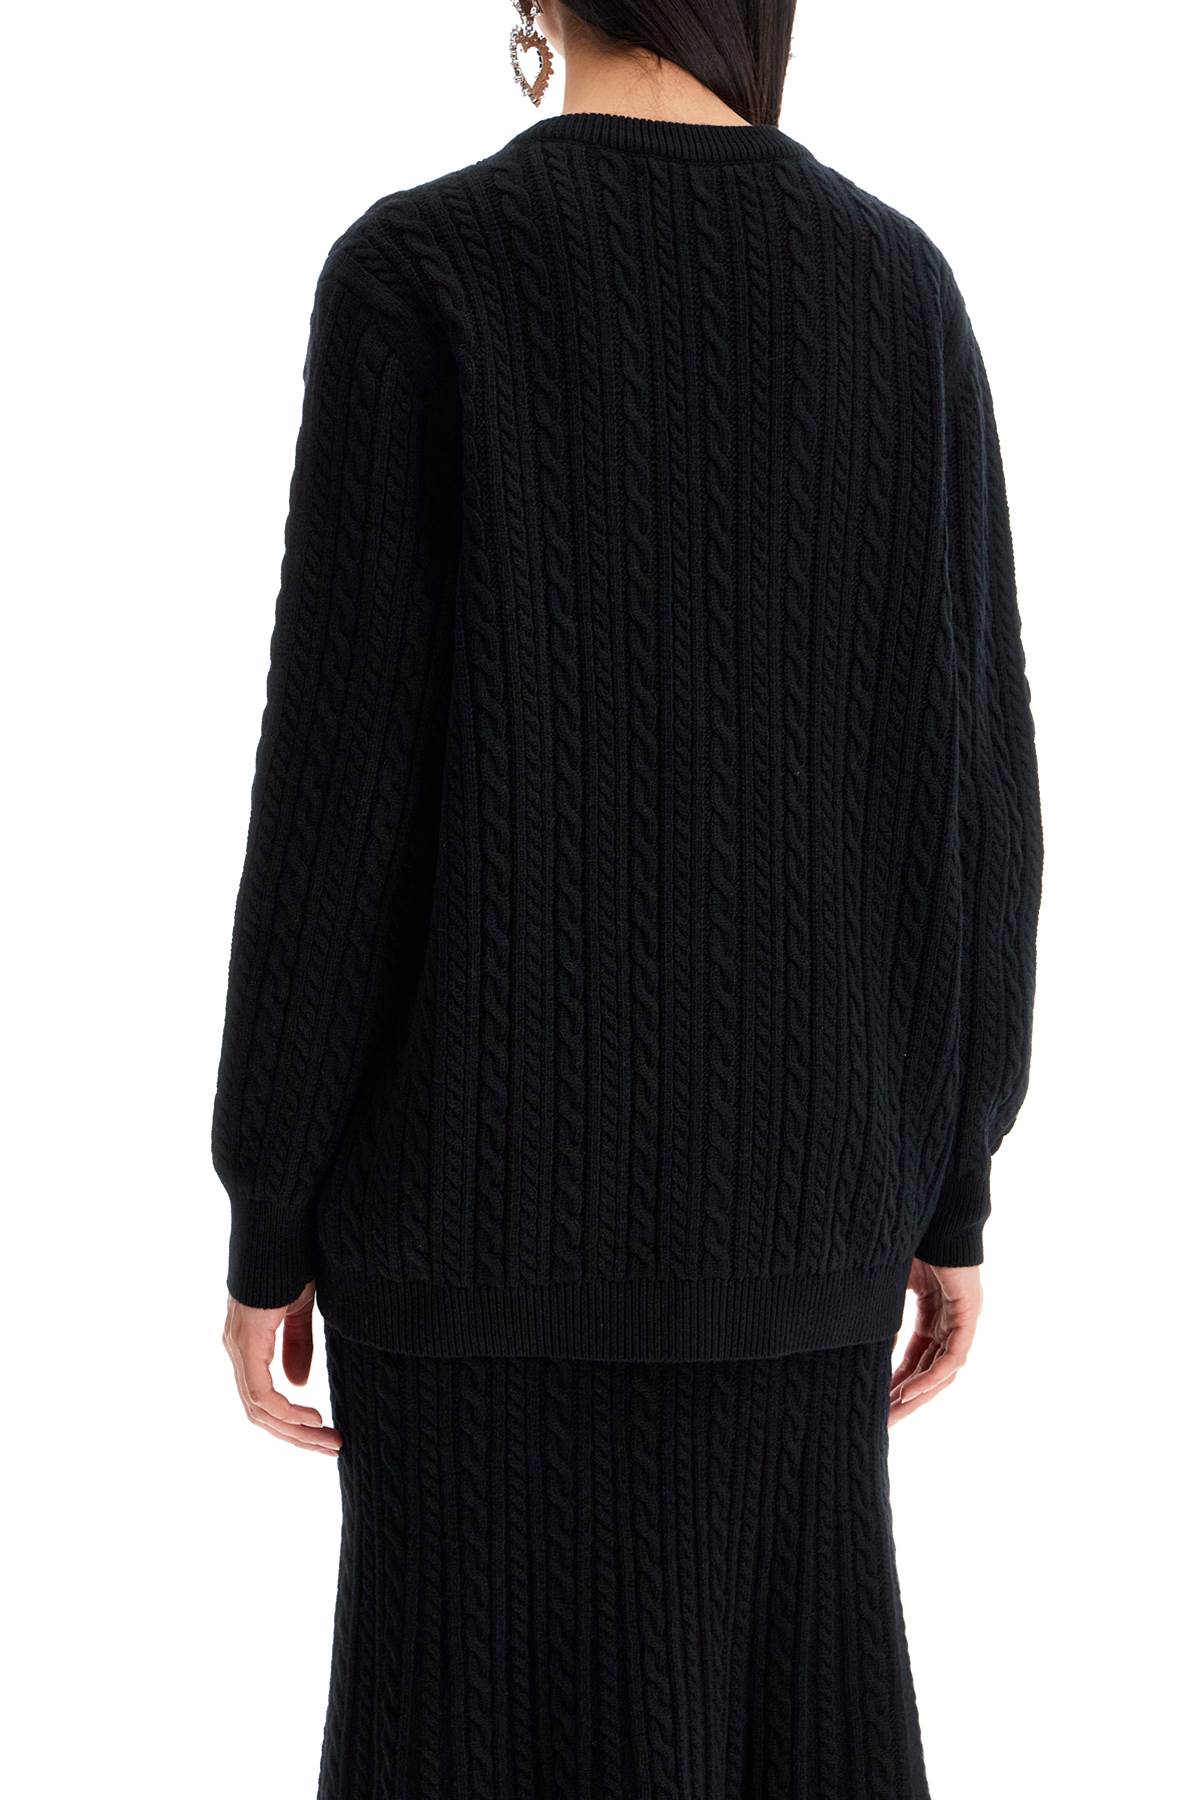 Alessandra Rich Oversized Wool Cardigan   Black